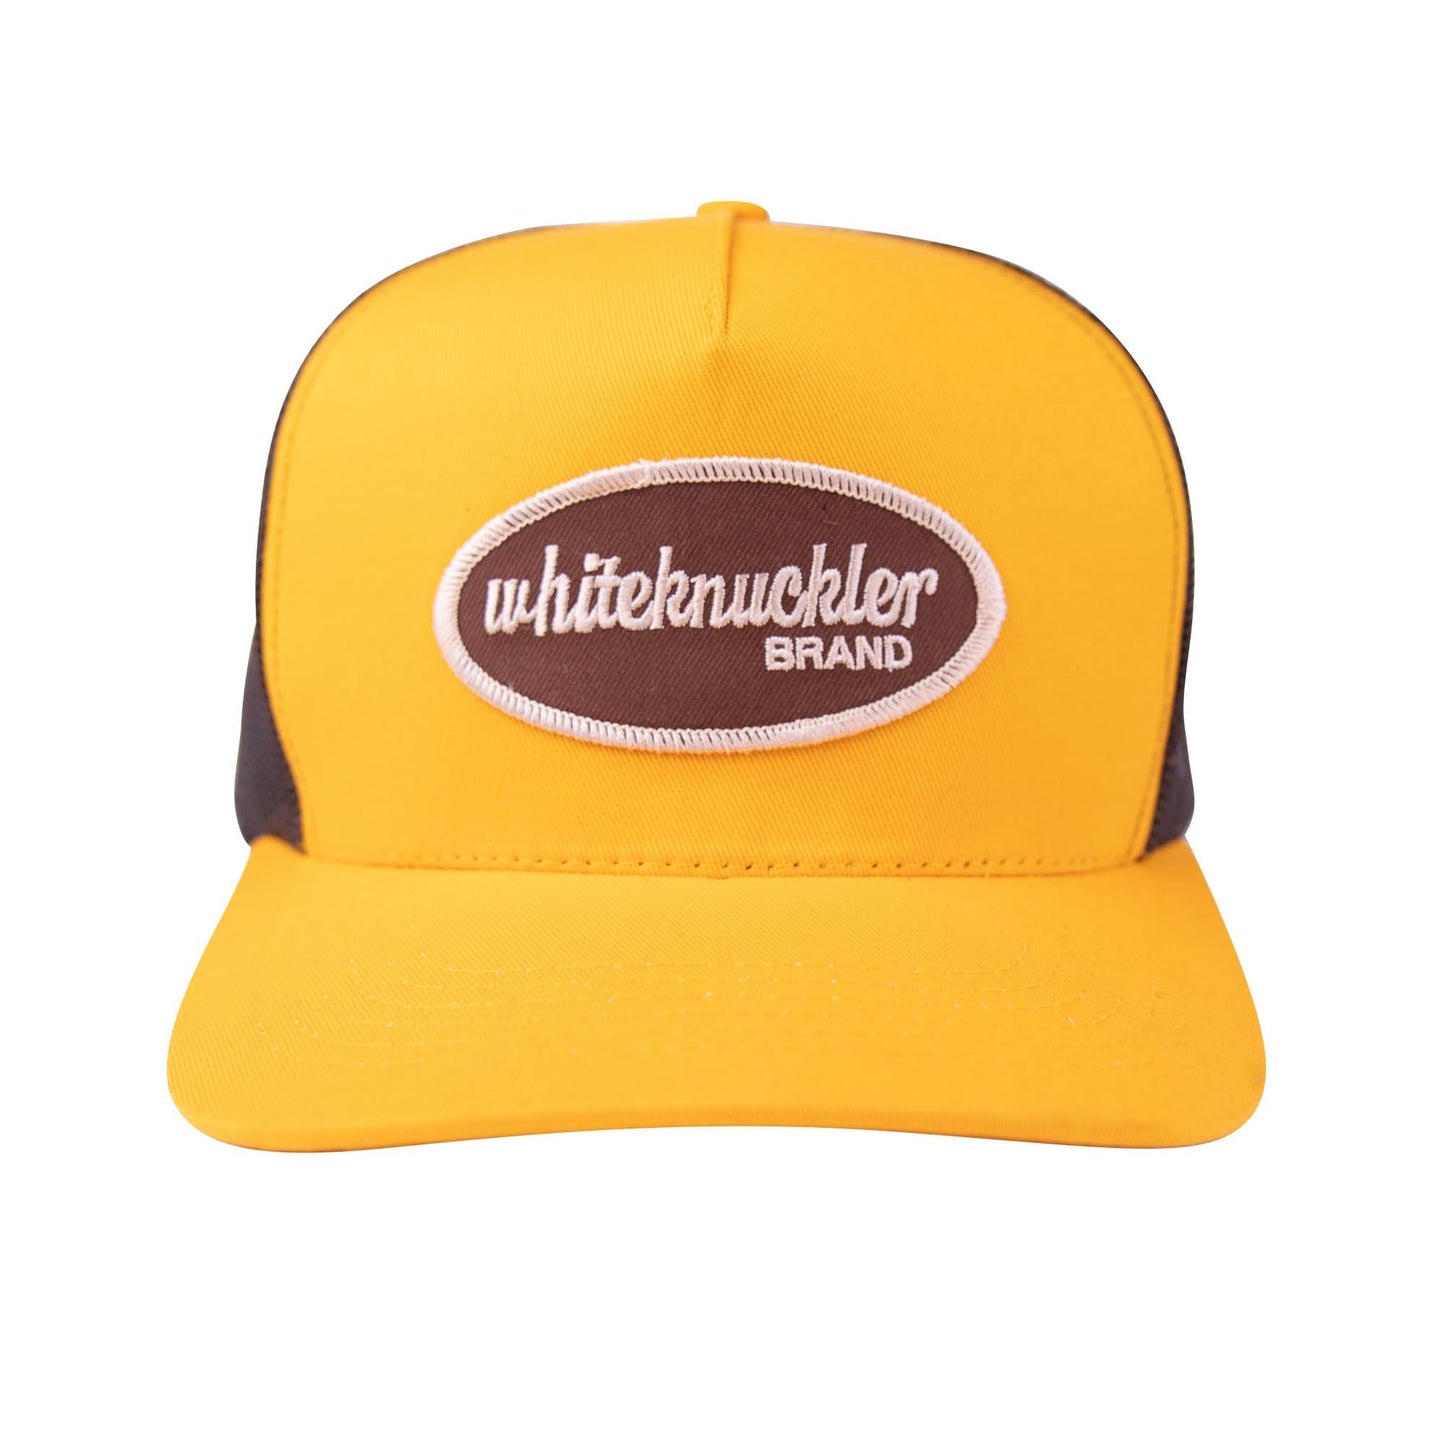 Classic Hat Series - Real Trucker Hat Golden Road